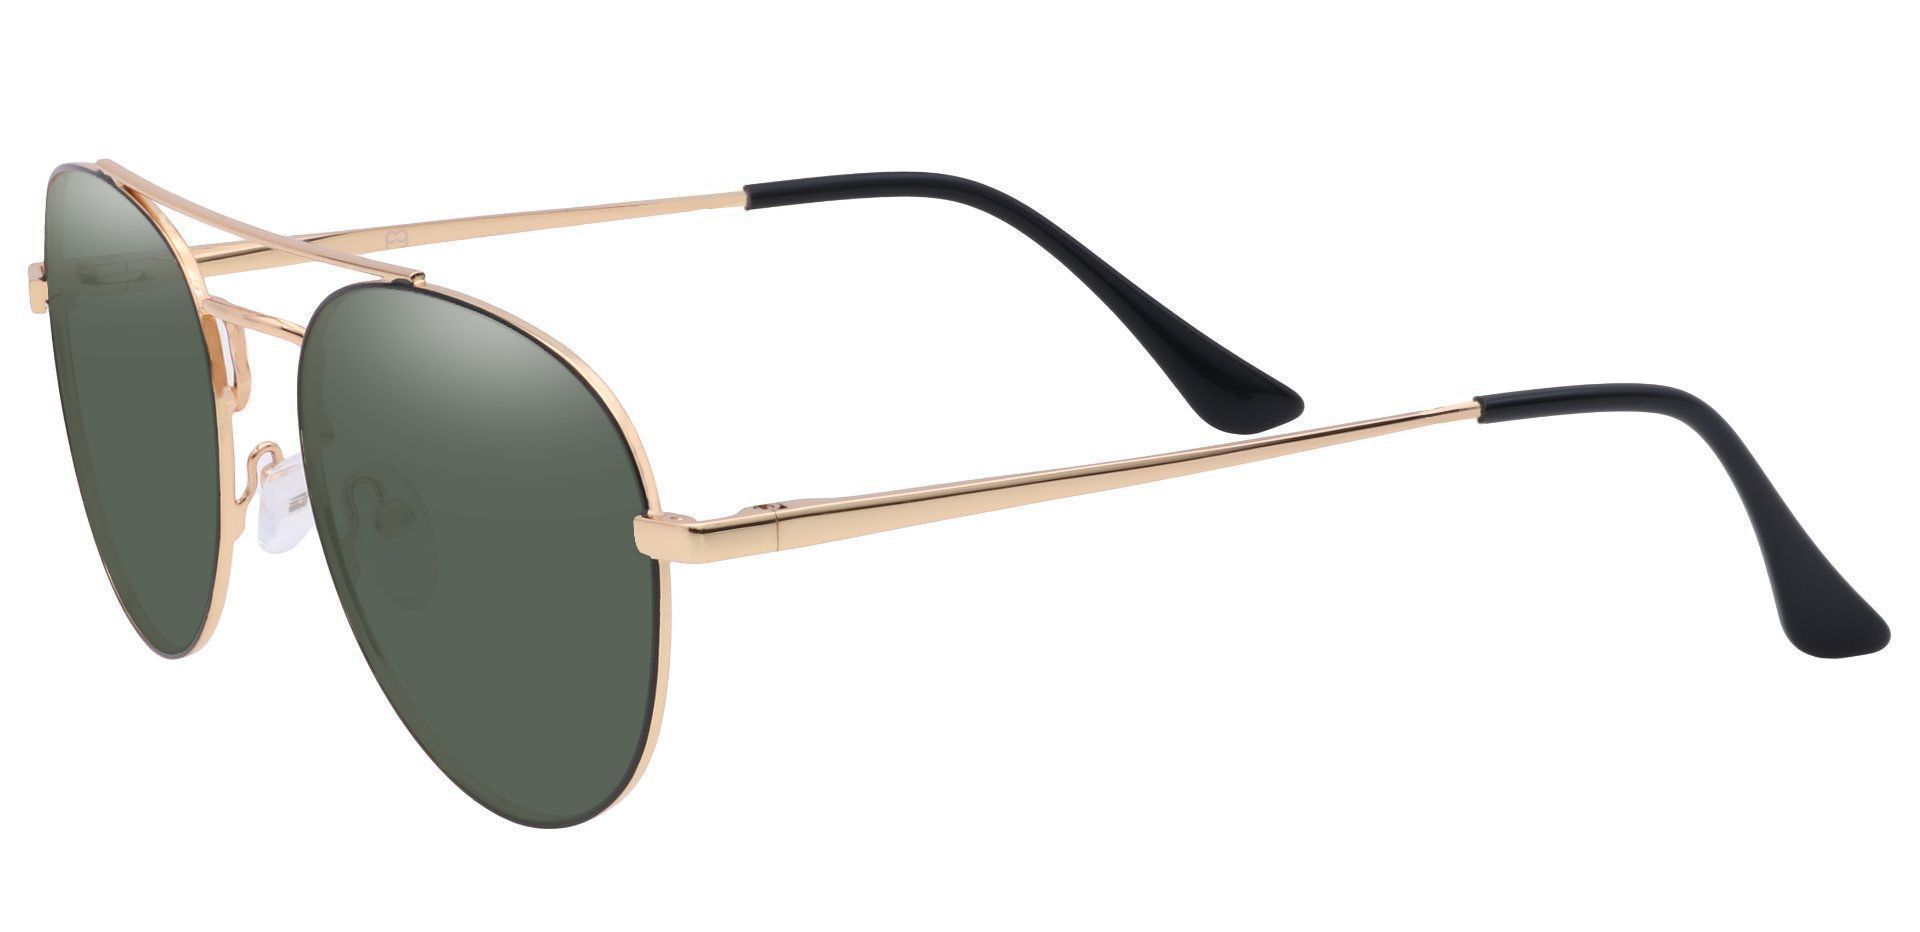 Trapp Aviator Prescription Sunglasses - Gold Frame With Green Lenses